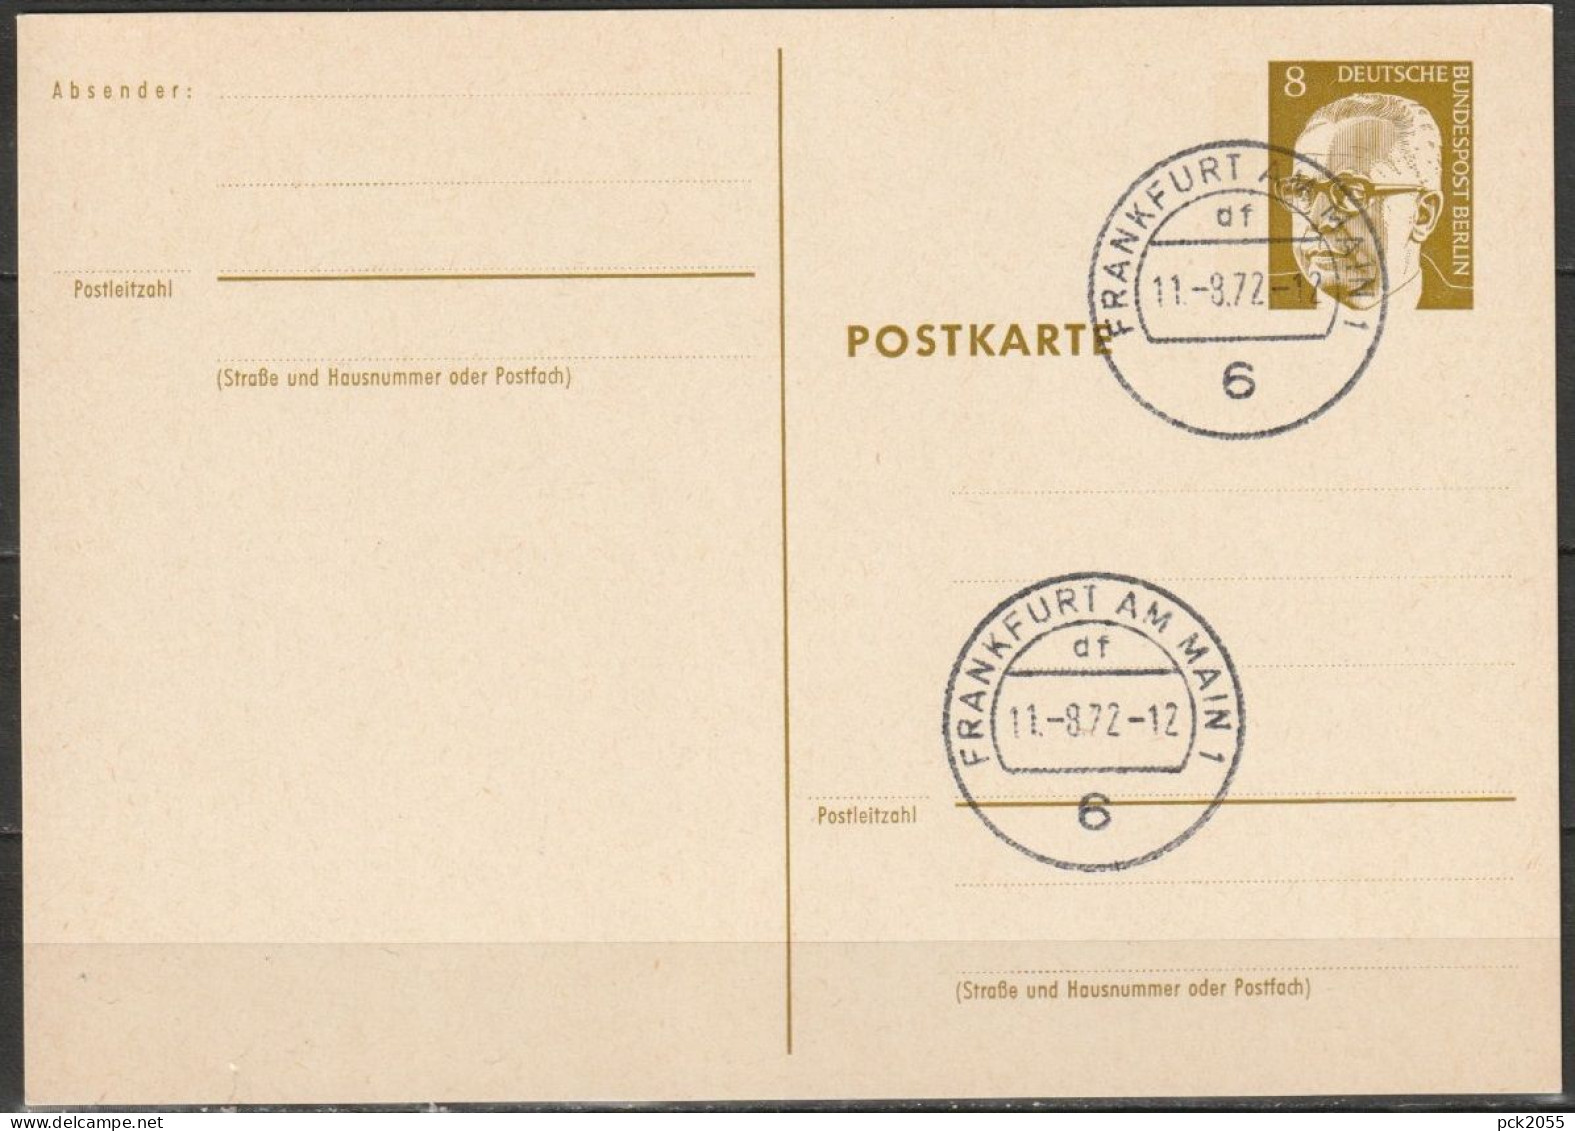 Berlin Ganzsache 1971/72 Mi.-Nr. P 80 Tagesstempel FRANKFURT 11.8.72  ( PK 201 ) - Postkarten - Gebraucht